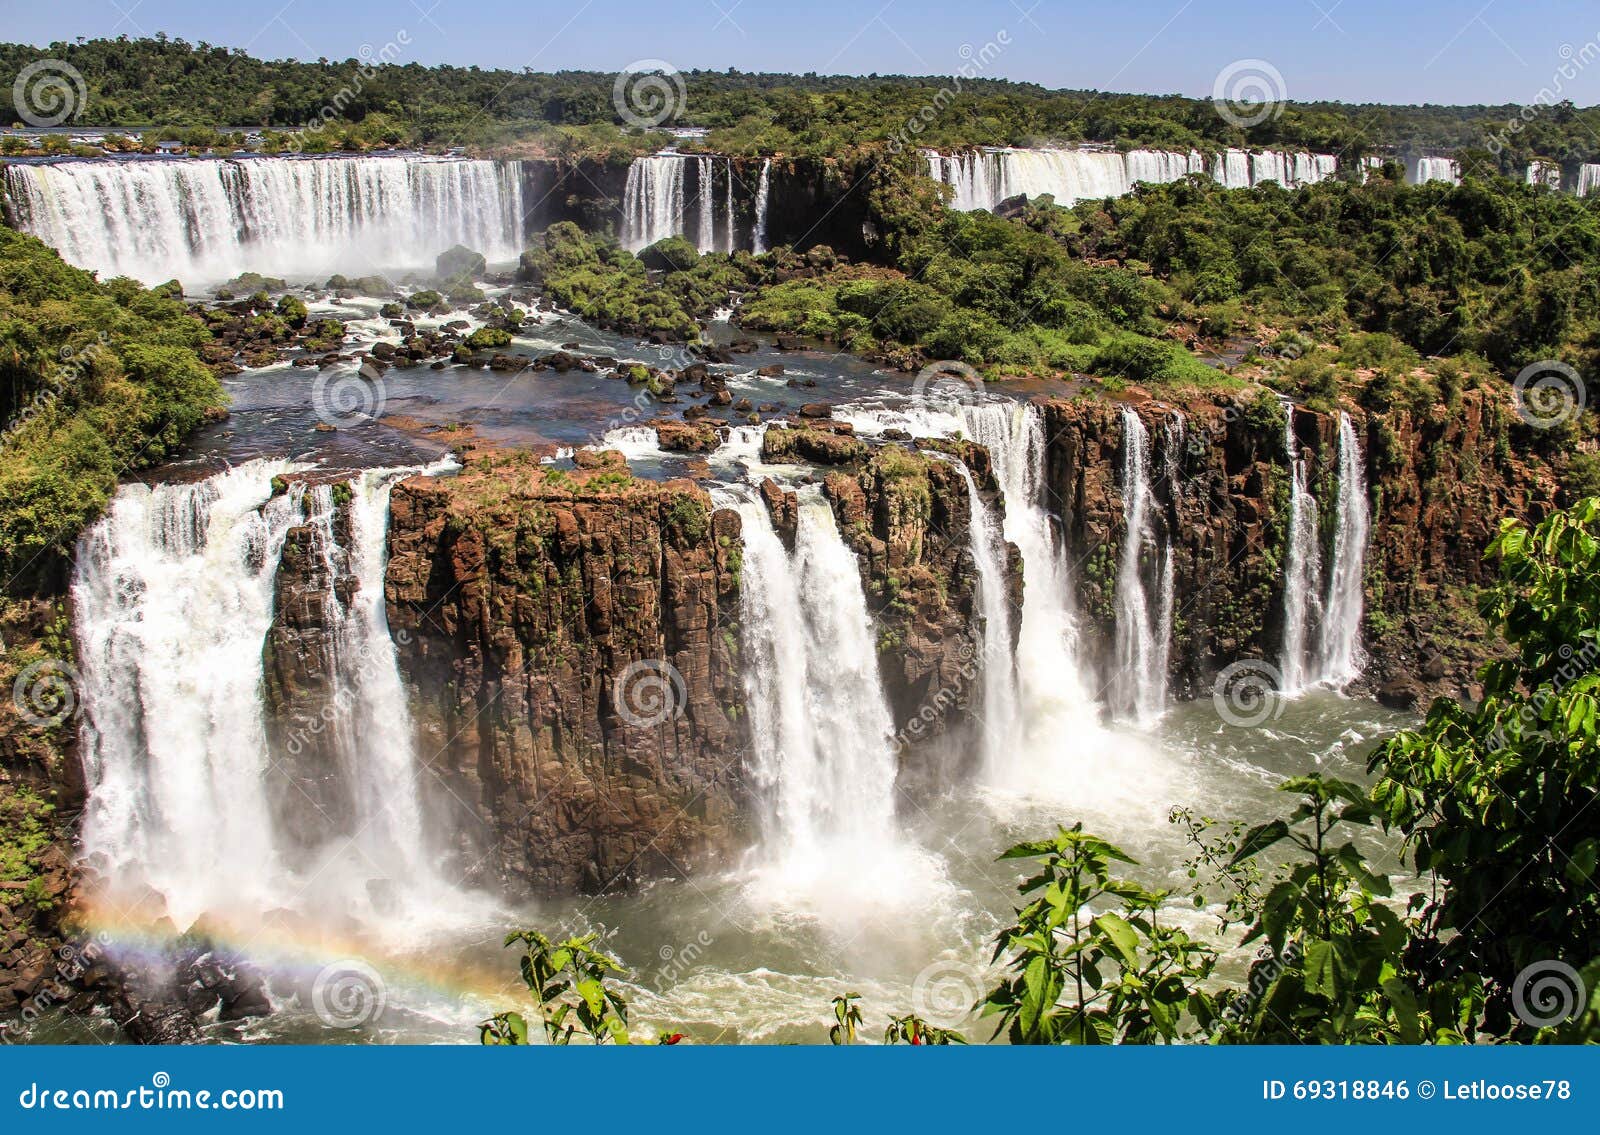 iguazu falls, brazilian side, parana, brazil